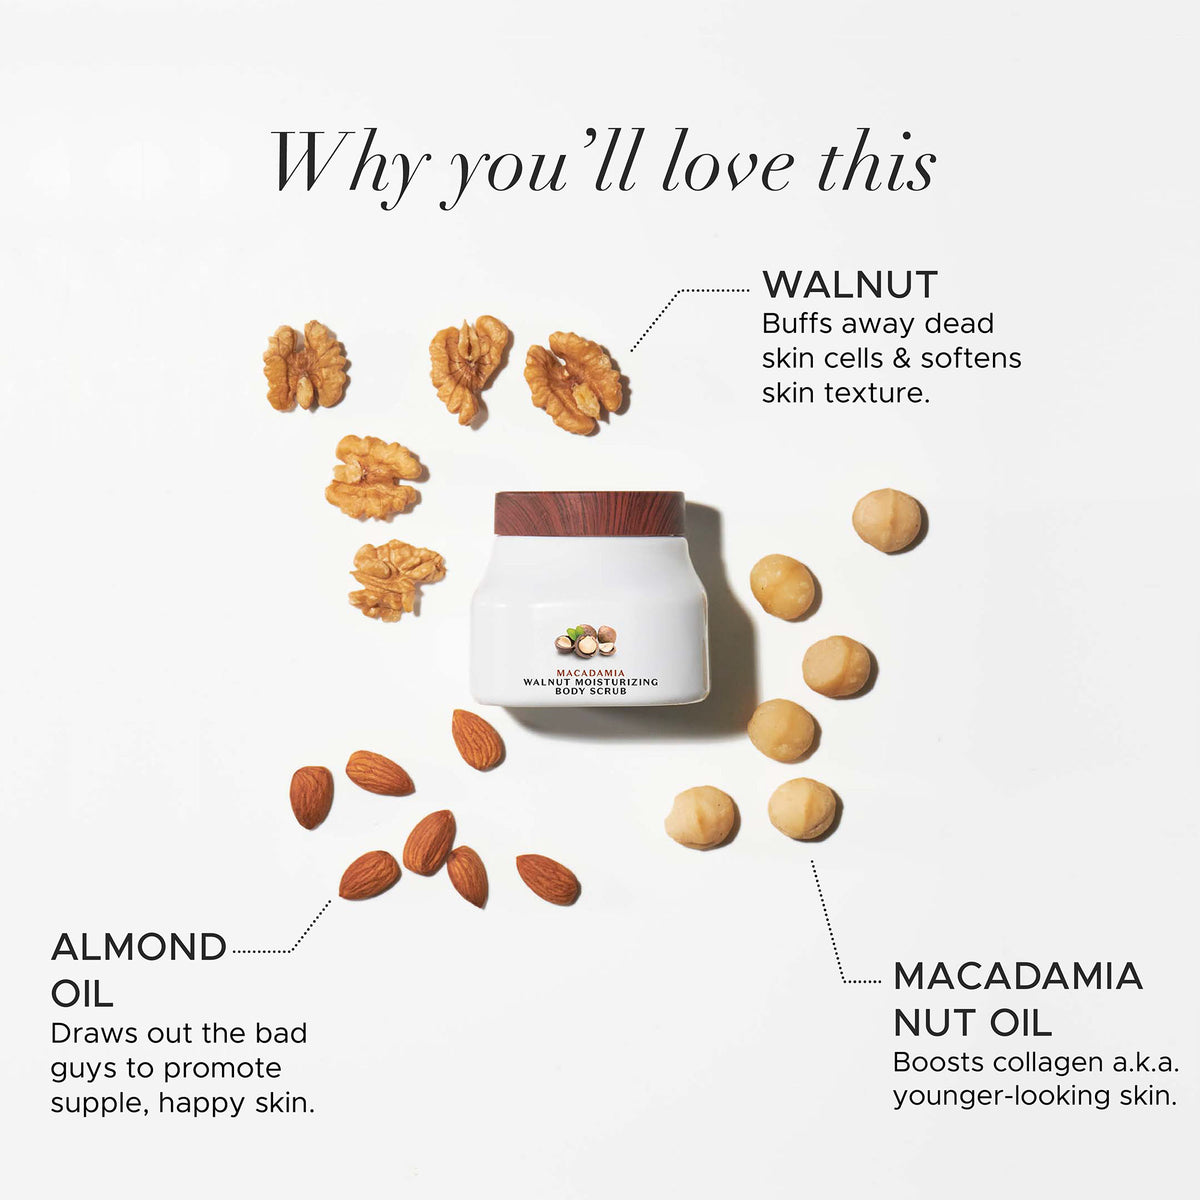 Macadamia Moisturising Almond & Walnut Body Scrub | From the makers of Parachute Advansed | 140ml - PureSense